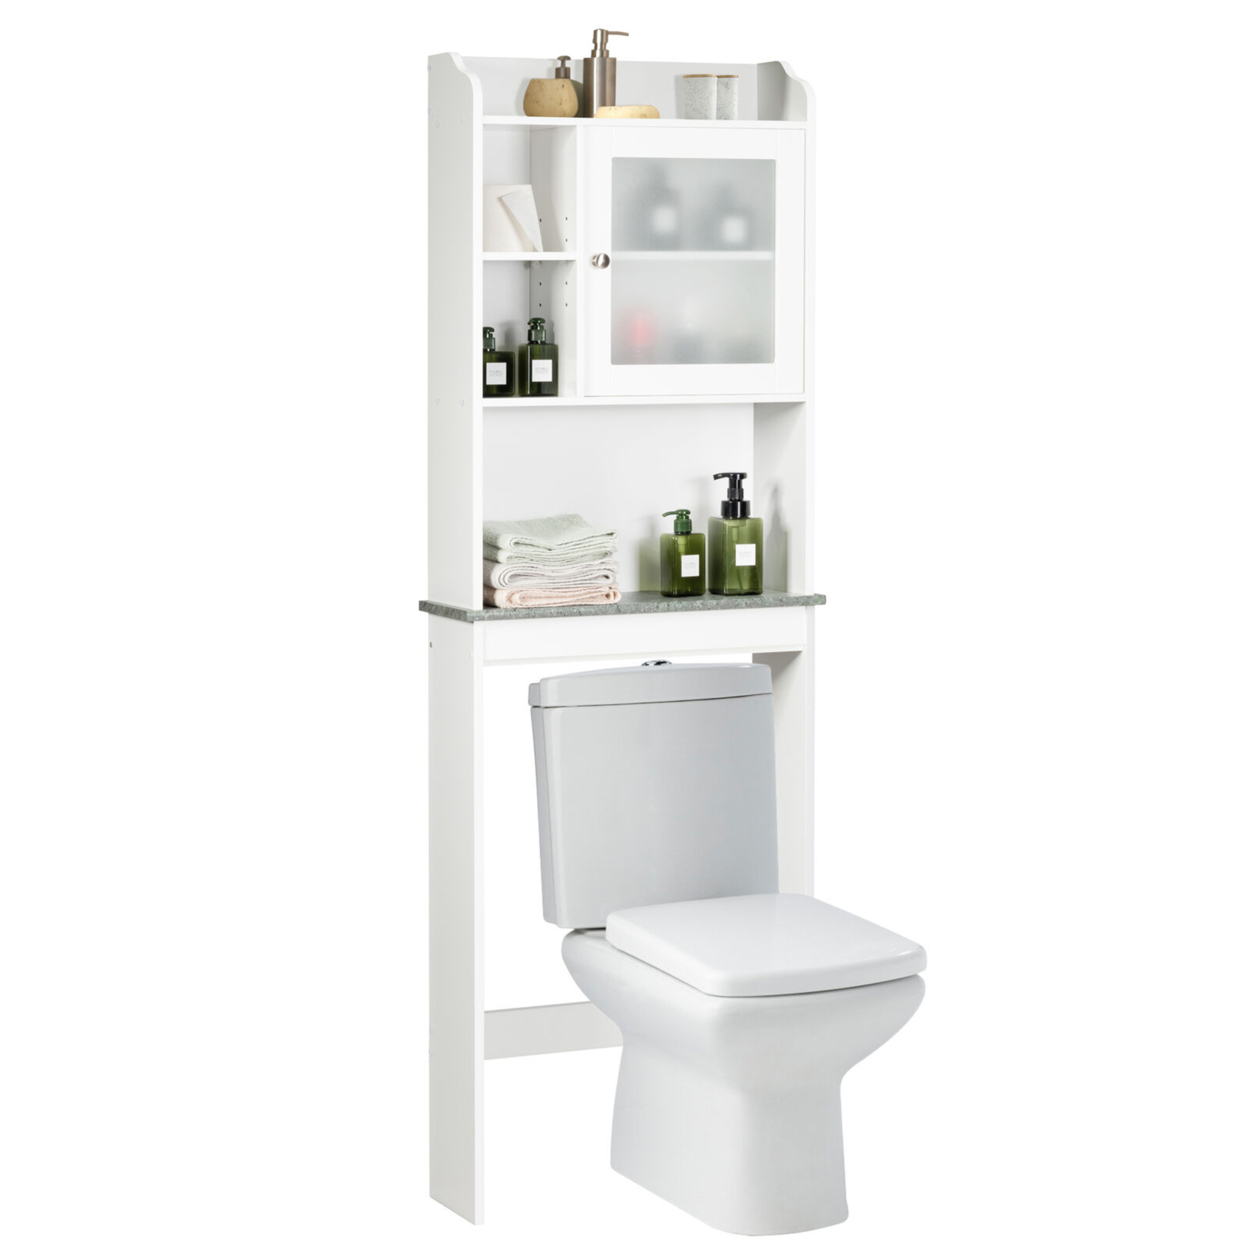 Over-the-Toilet Bath Cabinet Bathroom Space Saver Storage Organizer White